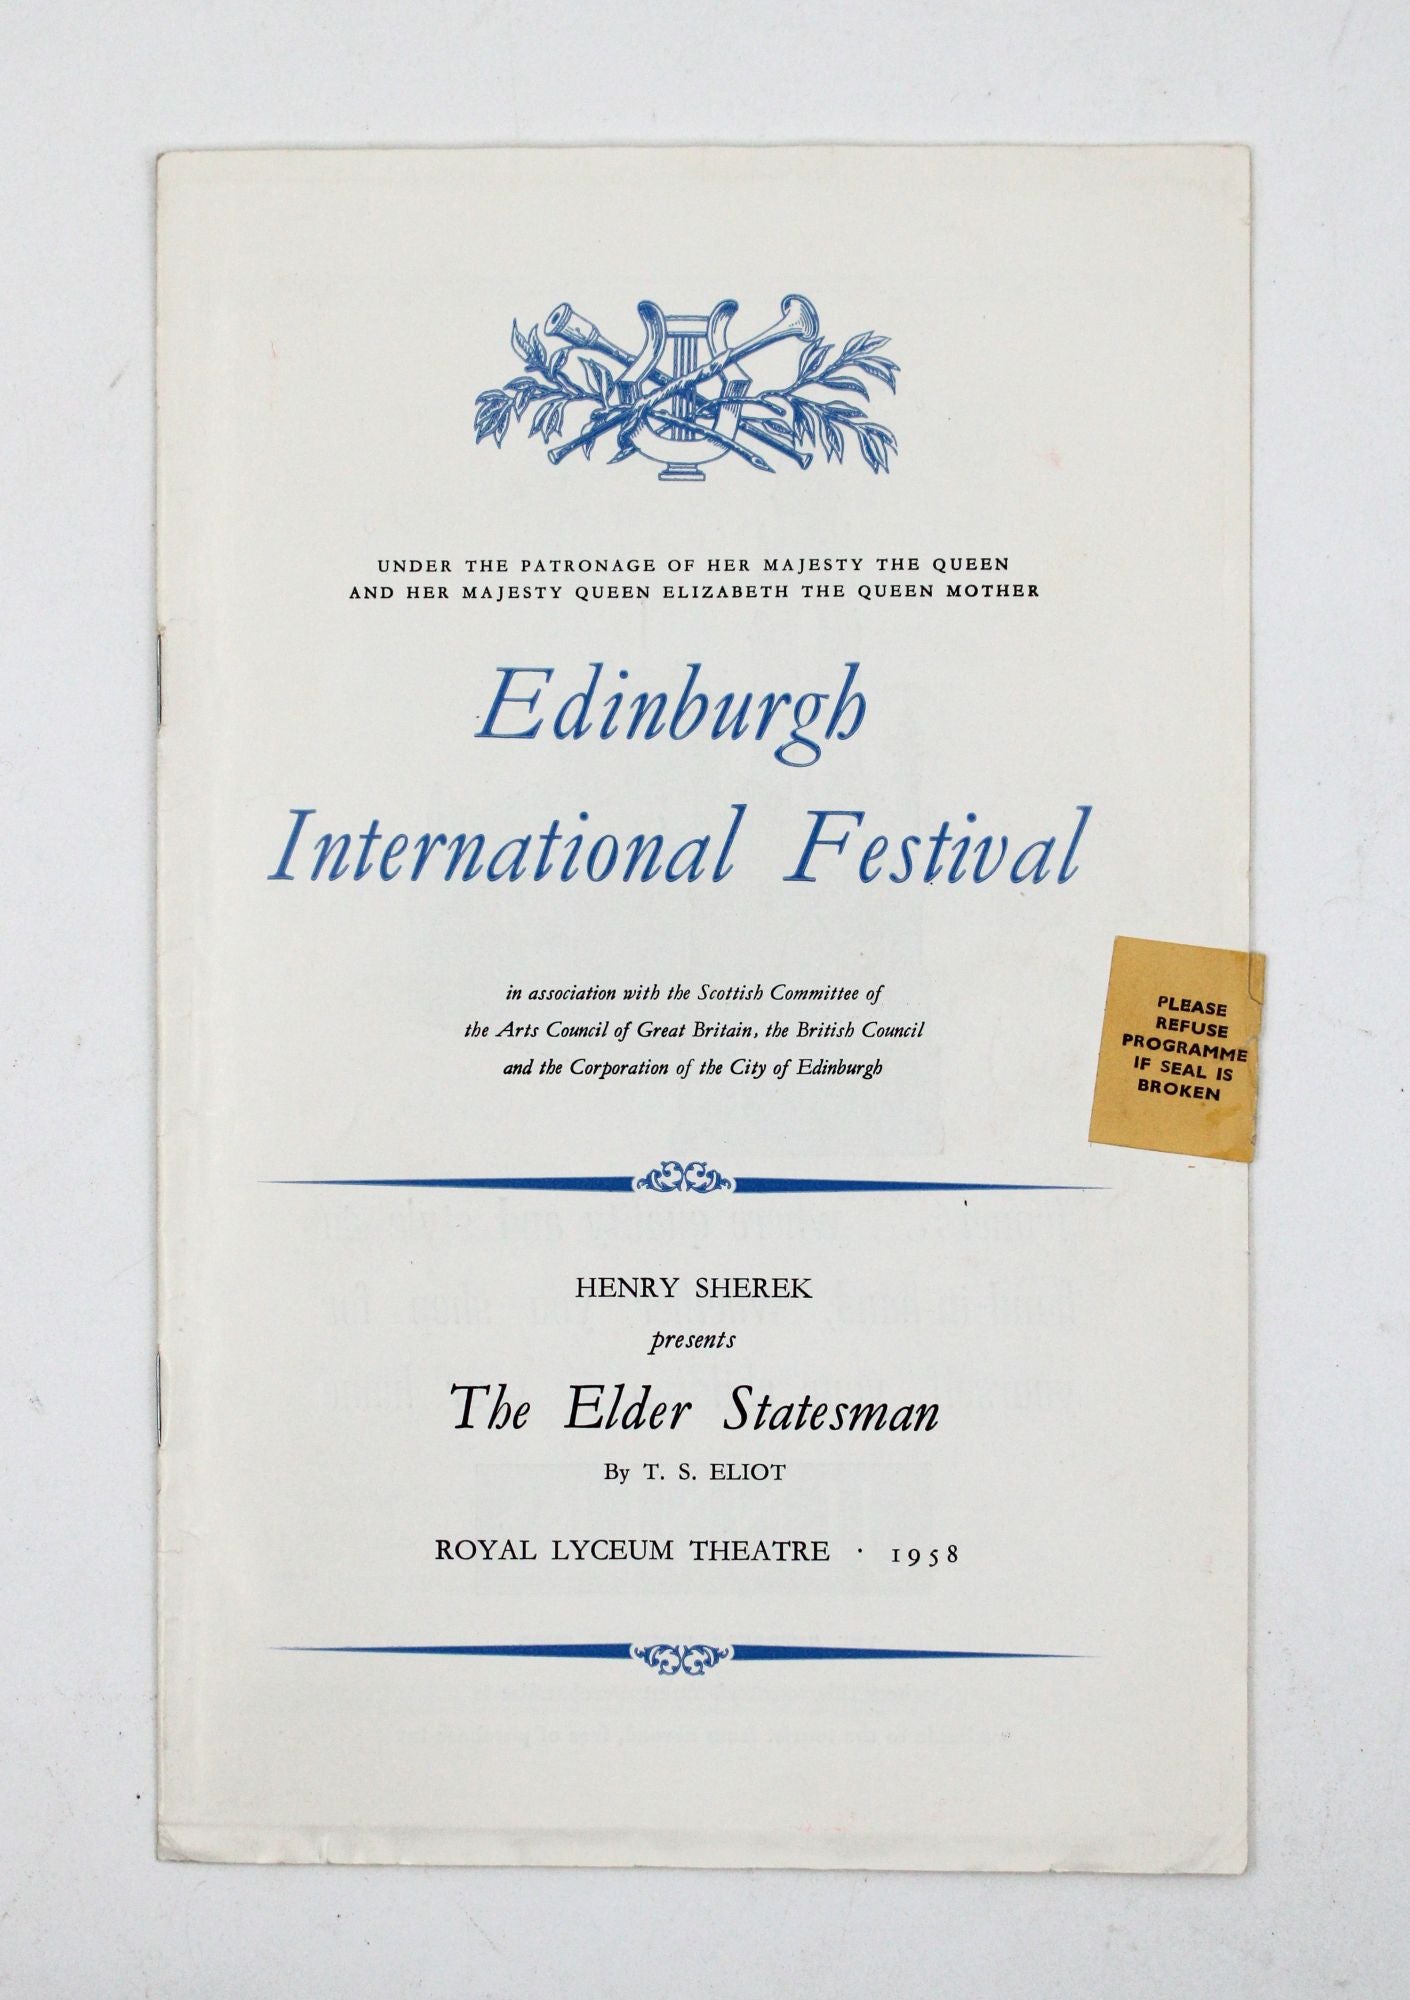 Edinburgh Festival 1958. Henry Sherek presents the world première of ...